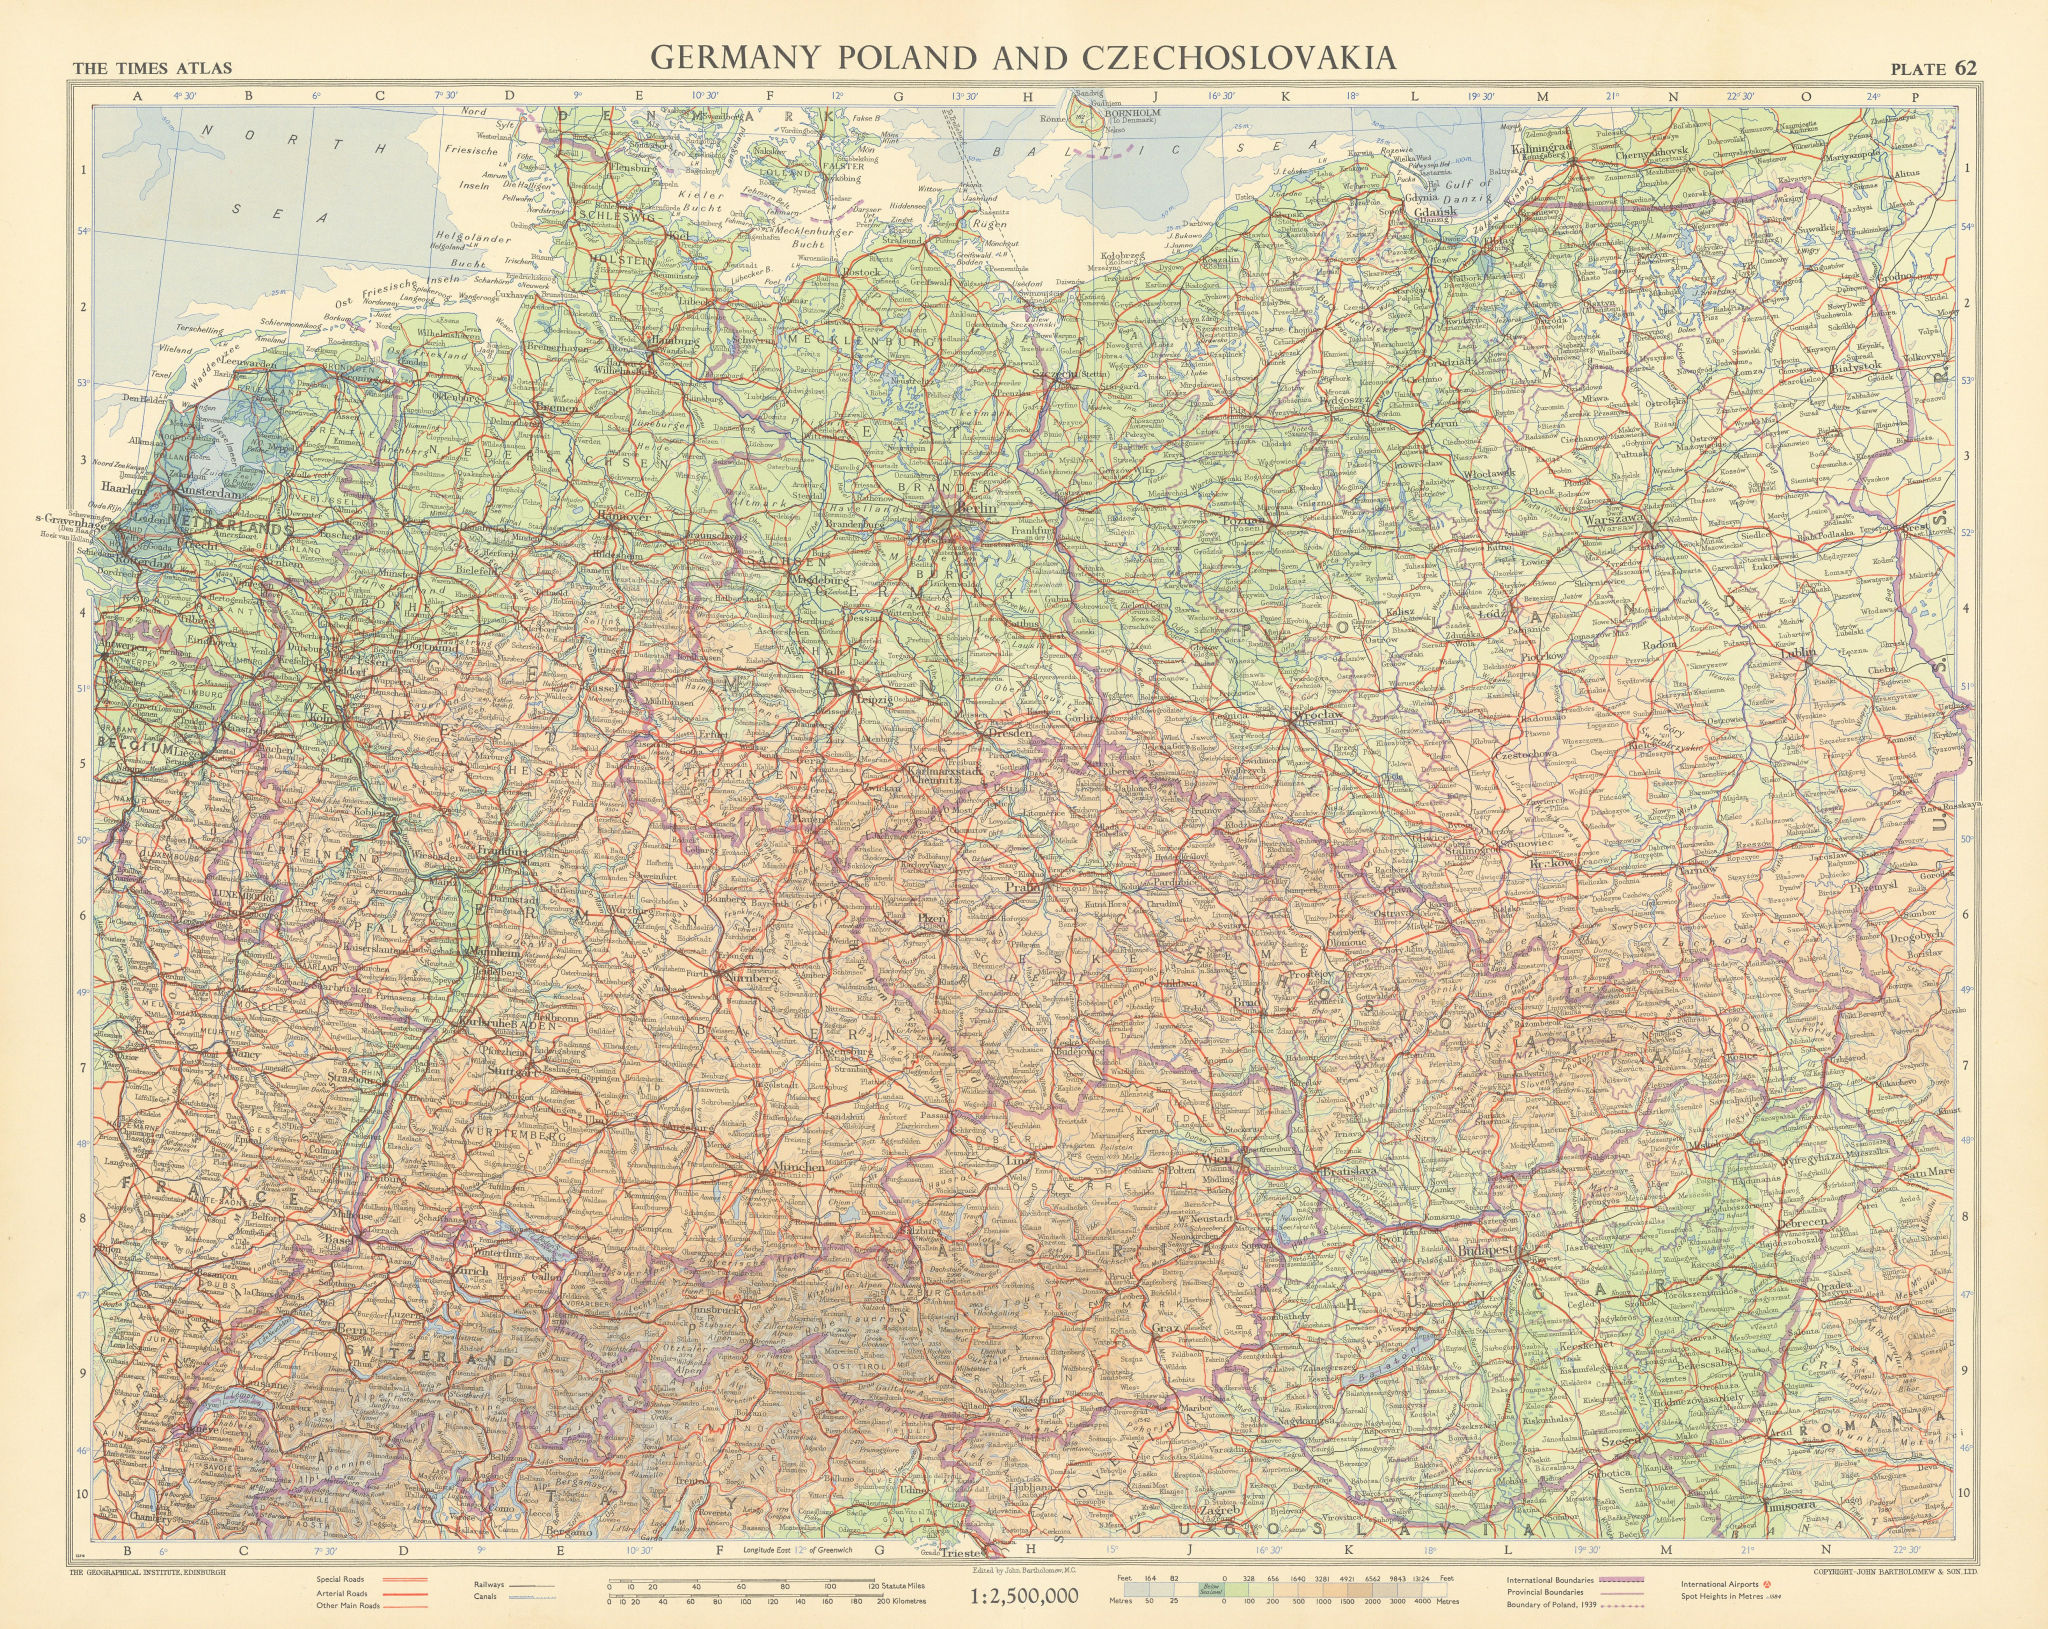 Germany Poland Czechoslovakia. Central Europe. Pre-1939 borders. TIMES 1955 map